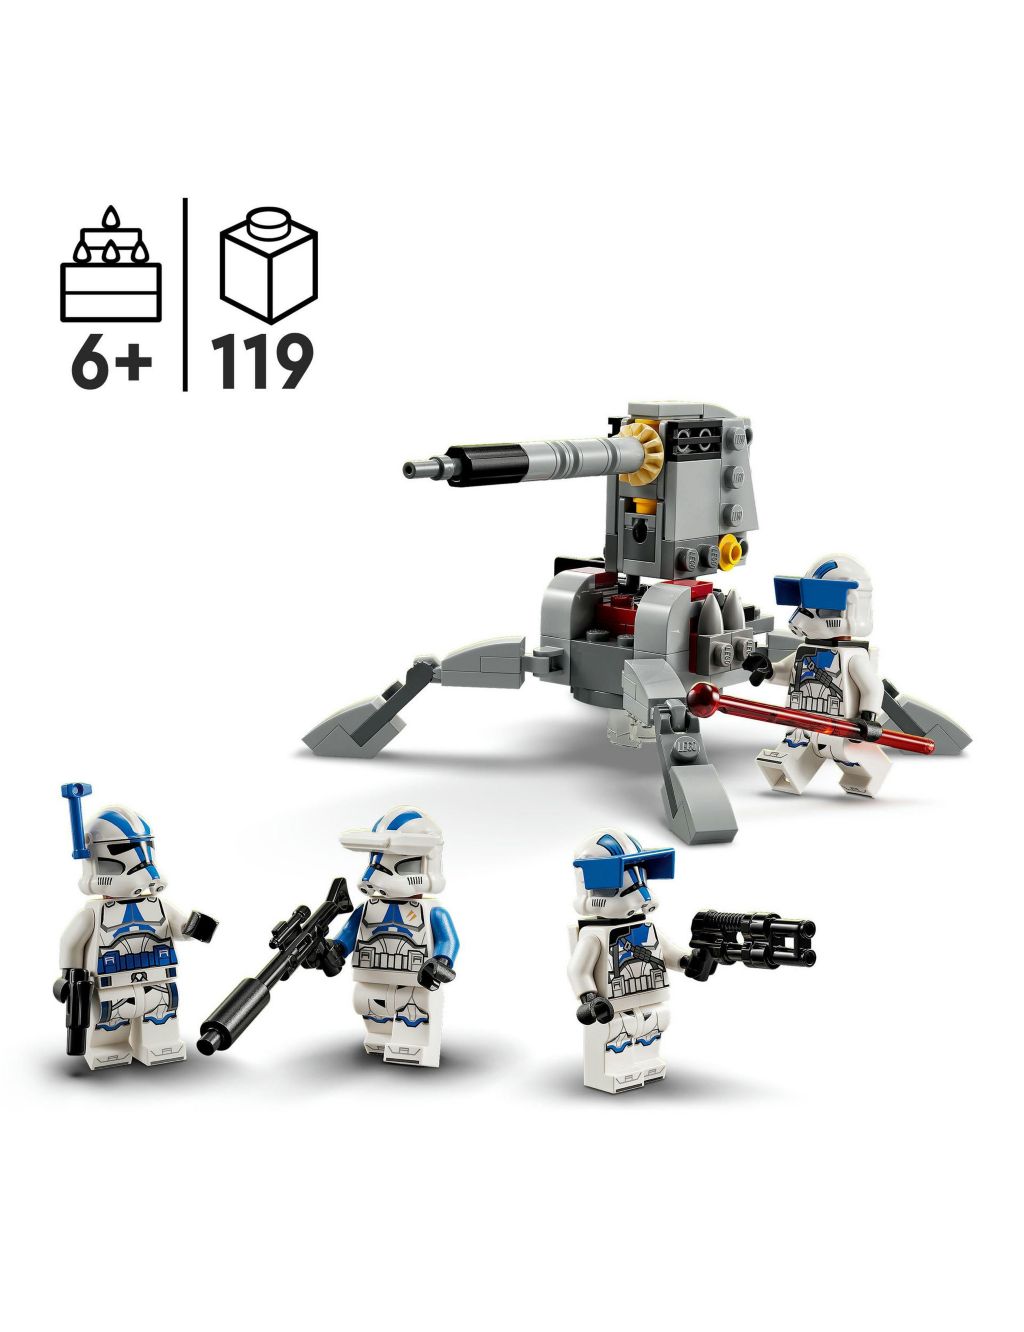 LEGO Star Wars 501st Clone Trooper Battle Pack (6+Yrs) image 2